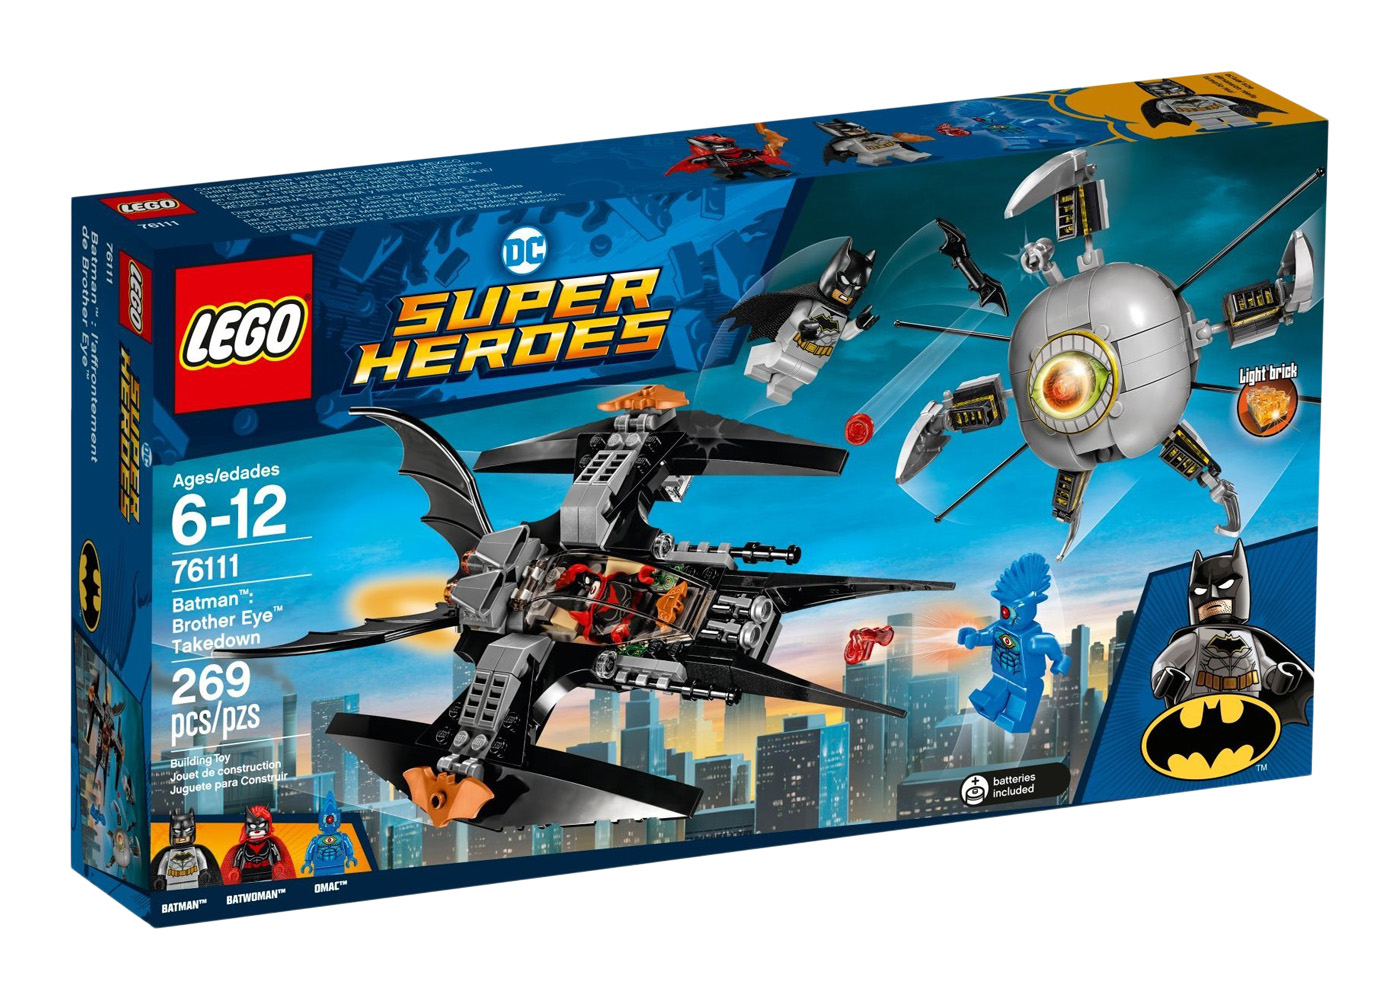 LEGO DC Comics Super Heroes Black Manta Deep Sea Strike Set 76027